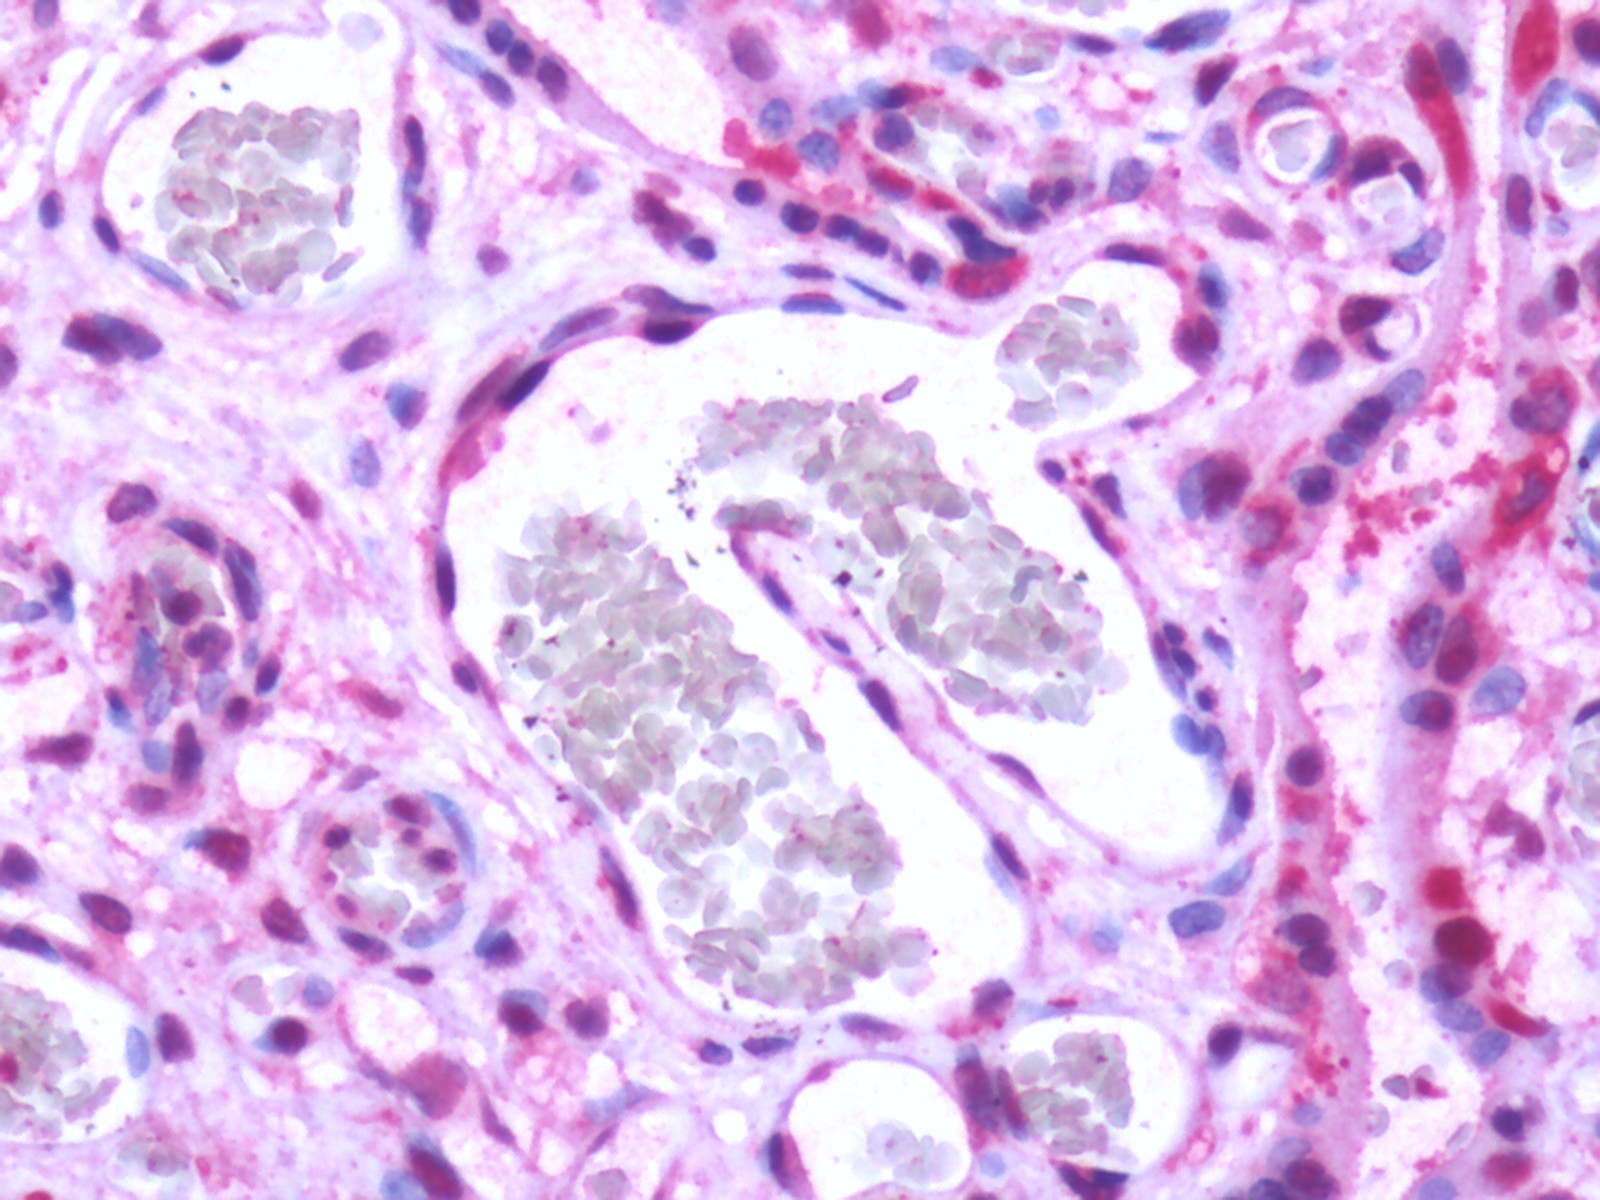 S1PR1 / EDG1 / S1P1 Antibody - Human, Placenta: Formalin-Fixed Paraffin-Embedded (FFPE)